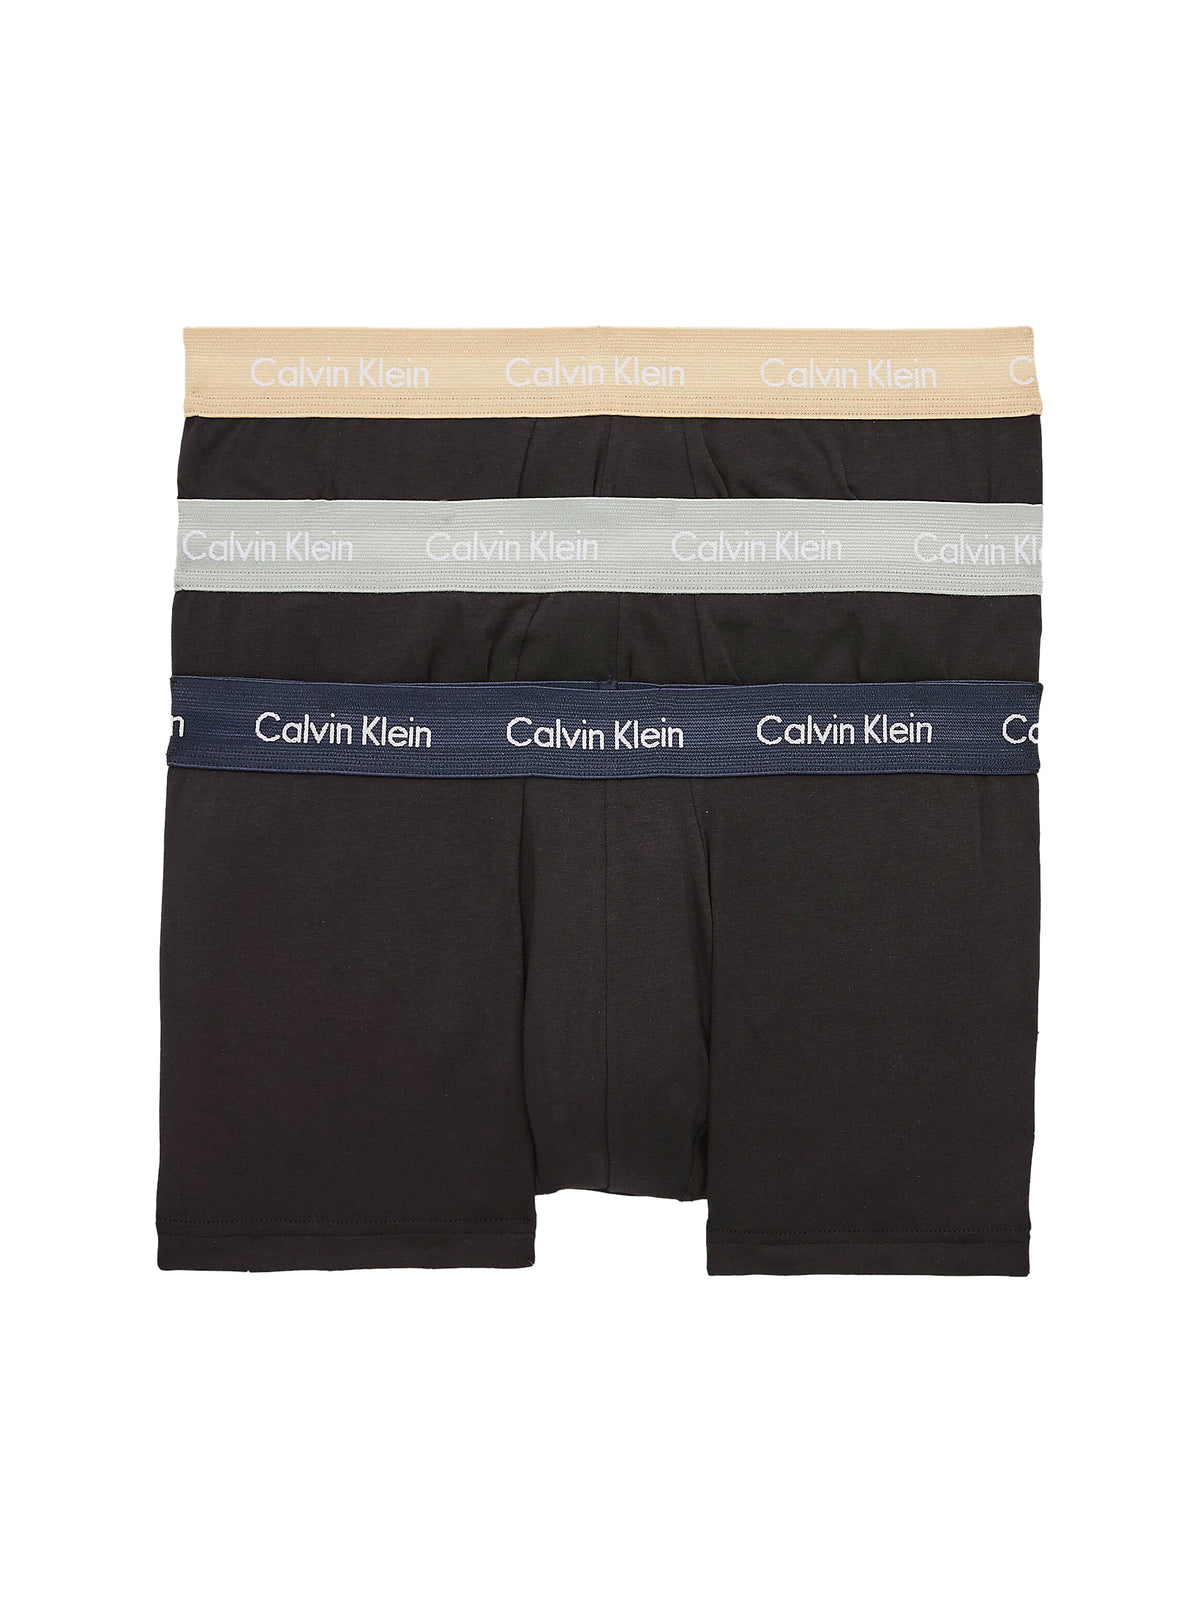 Mens Calvin Klein Boxer Shorts Low Rise Trunks 3 Pack, 01, U2664G, B-Shoreline/ Grey/ Travertine Wb